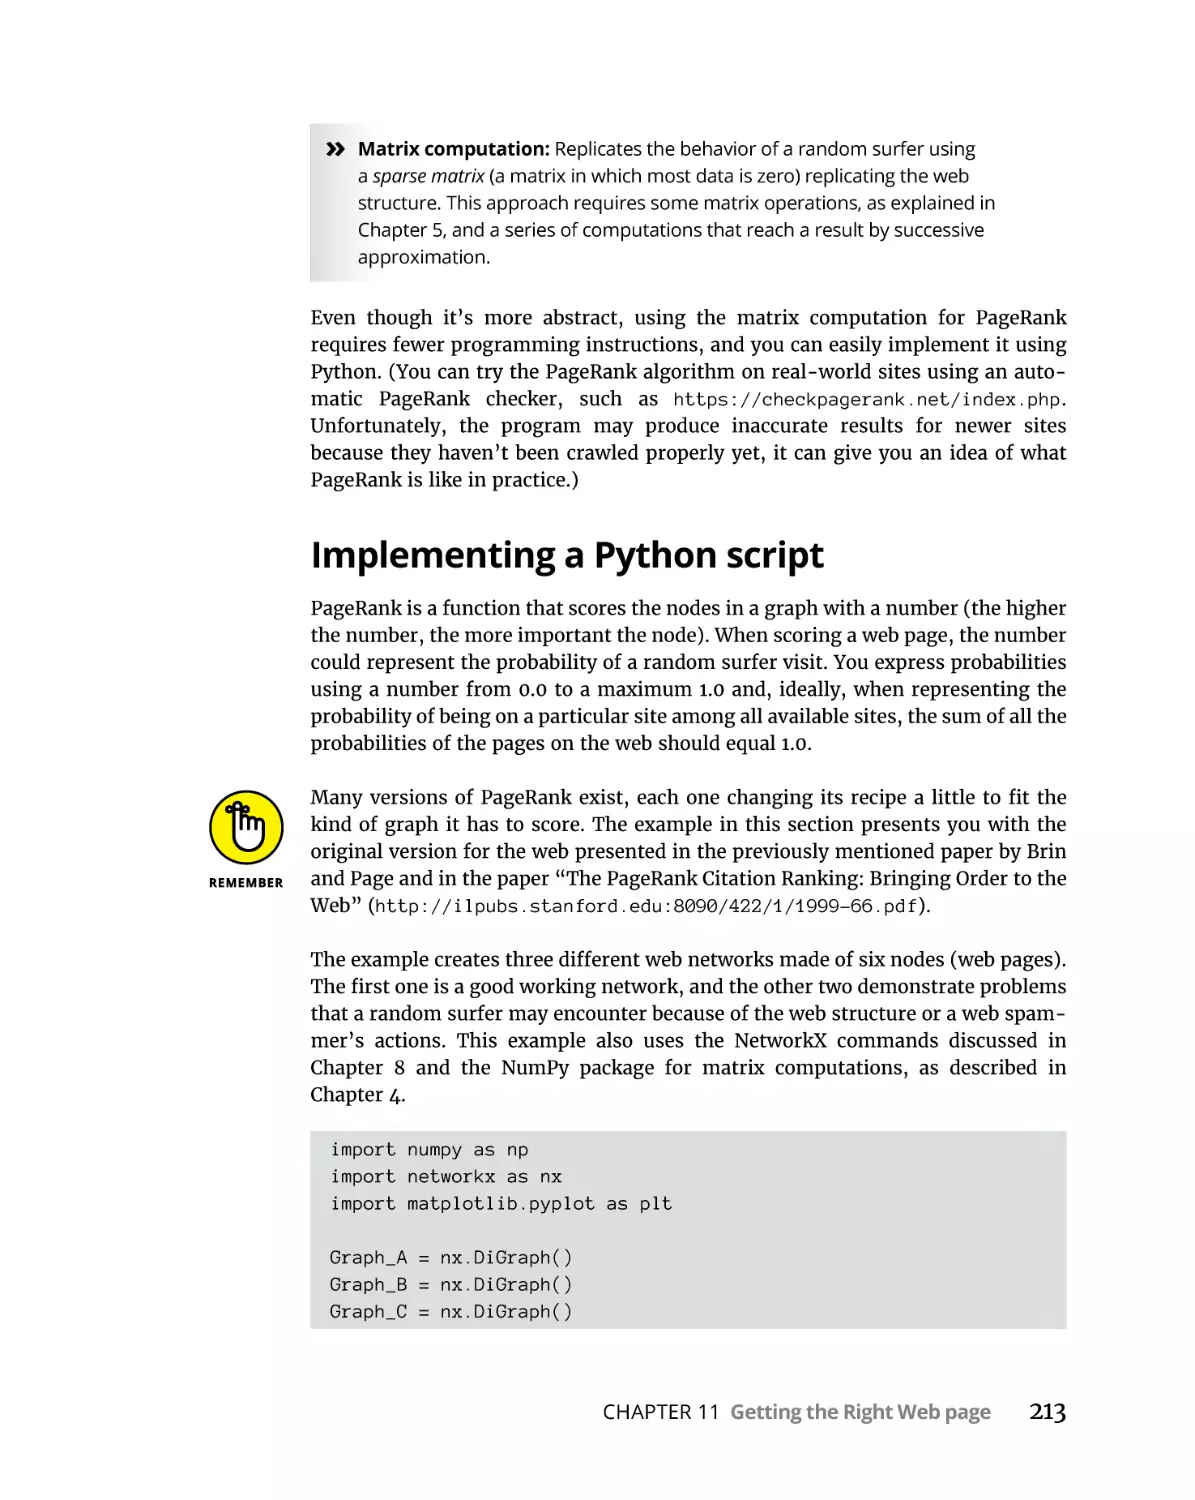 Implementing a Python script